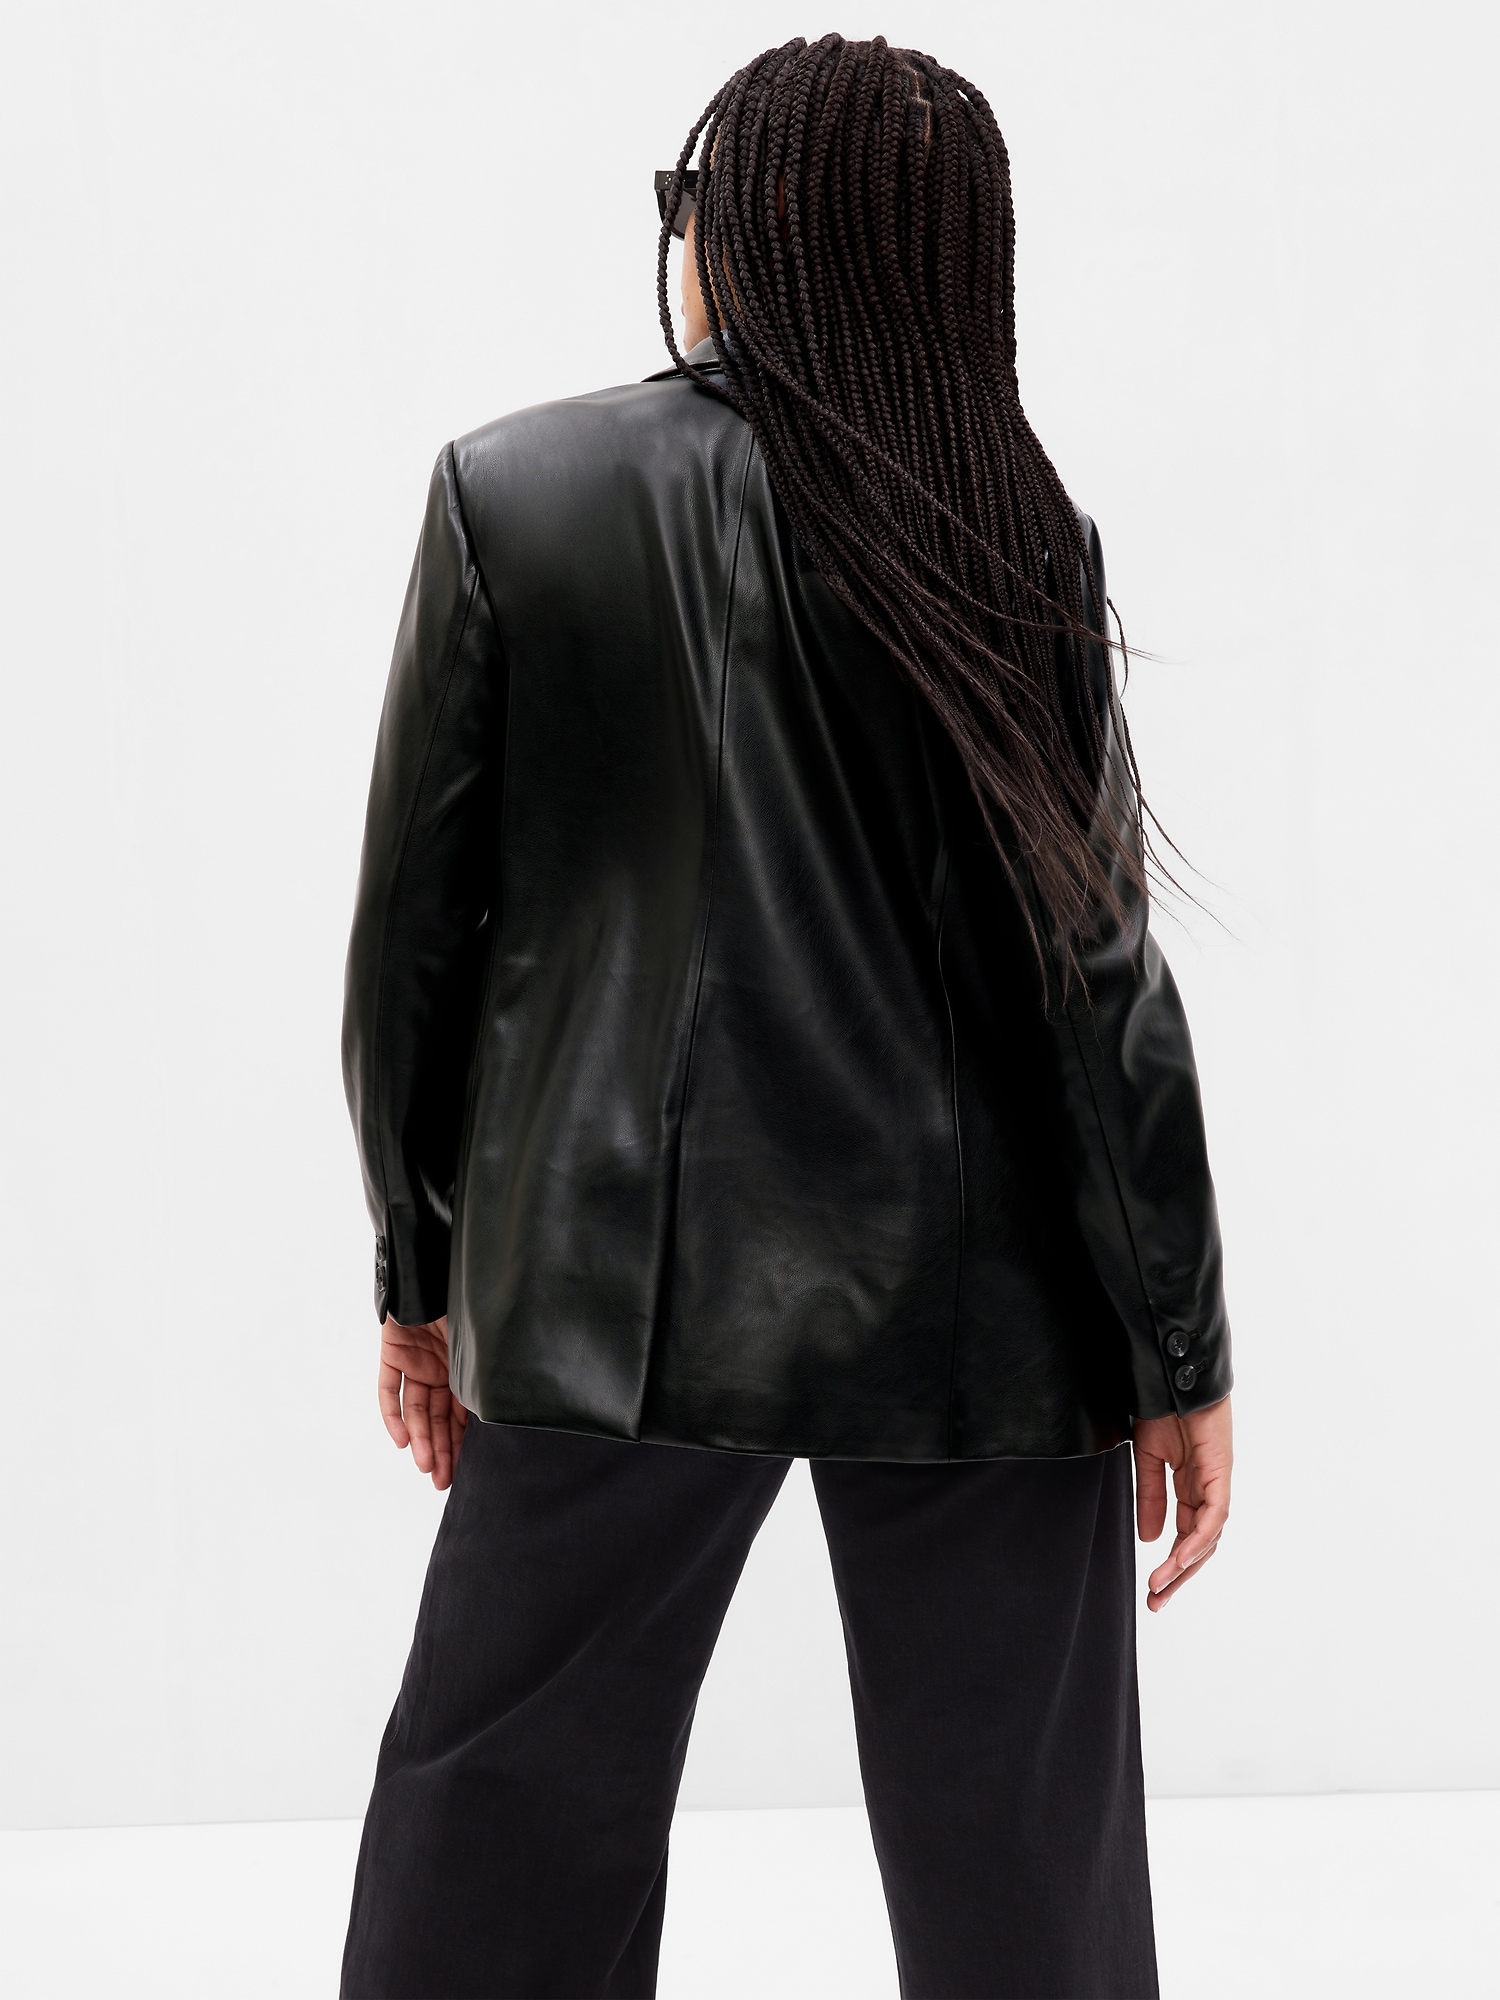 Women's Black Double Breasted Blazer, Black Leather Leggings, Beige Leather  Pumps, Black Leather Crossbody Bag